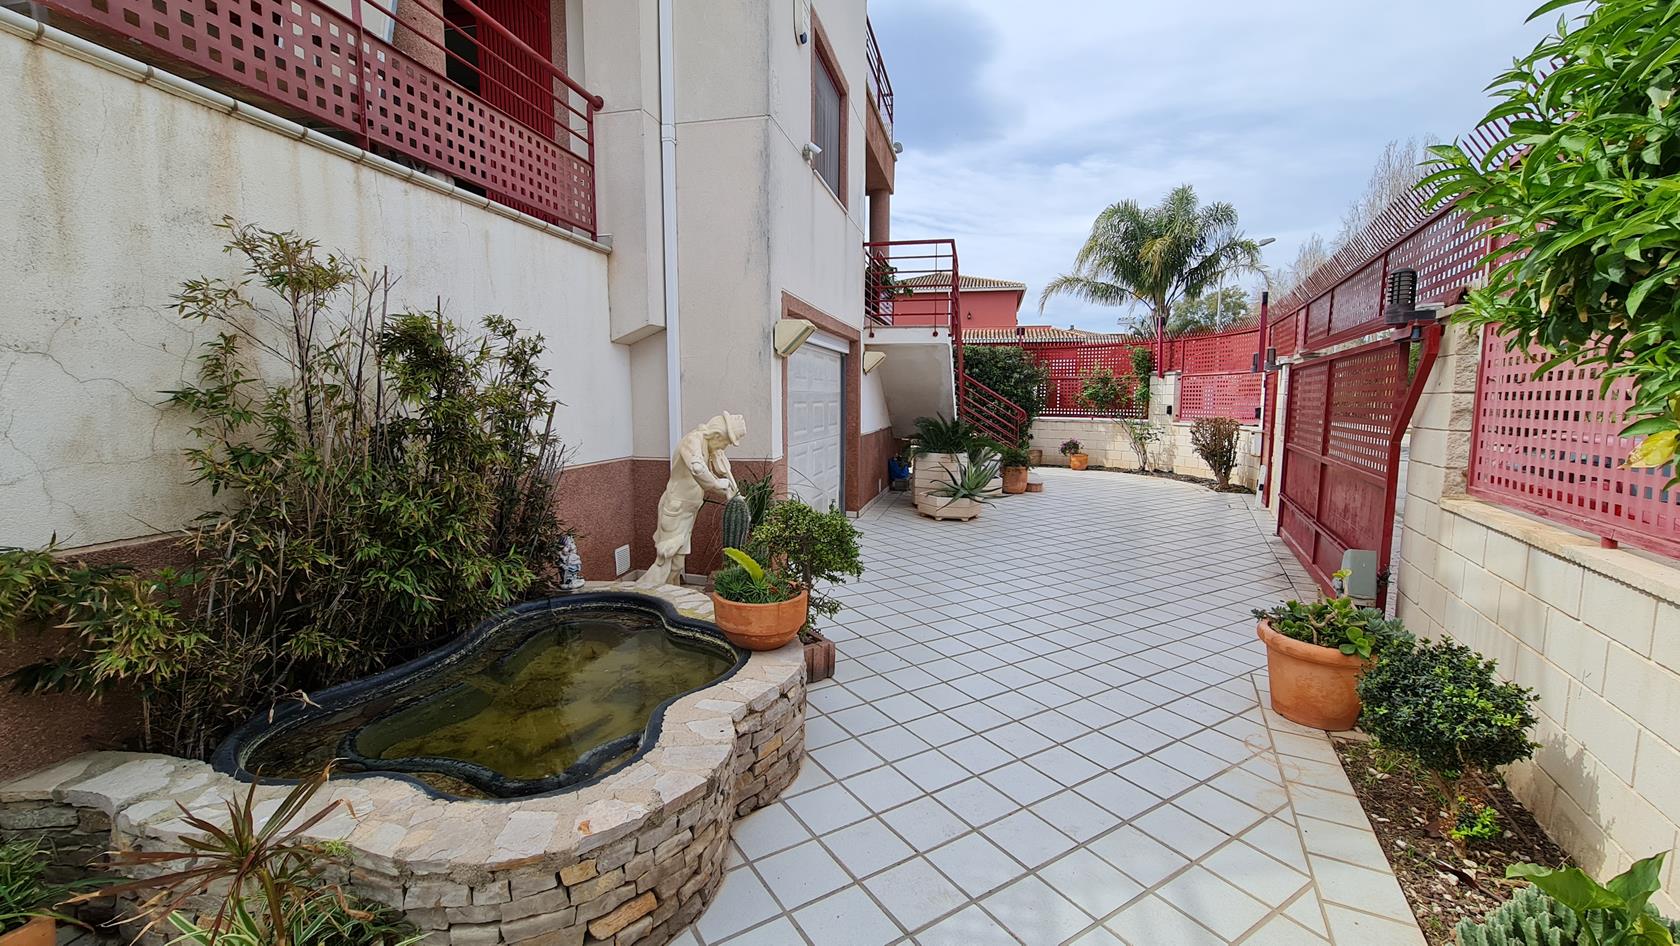 Fantastique villa individuelle avec piscine, jardin, garage....